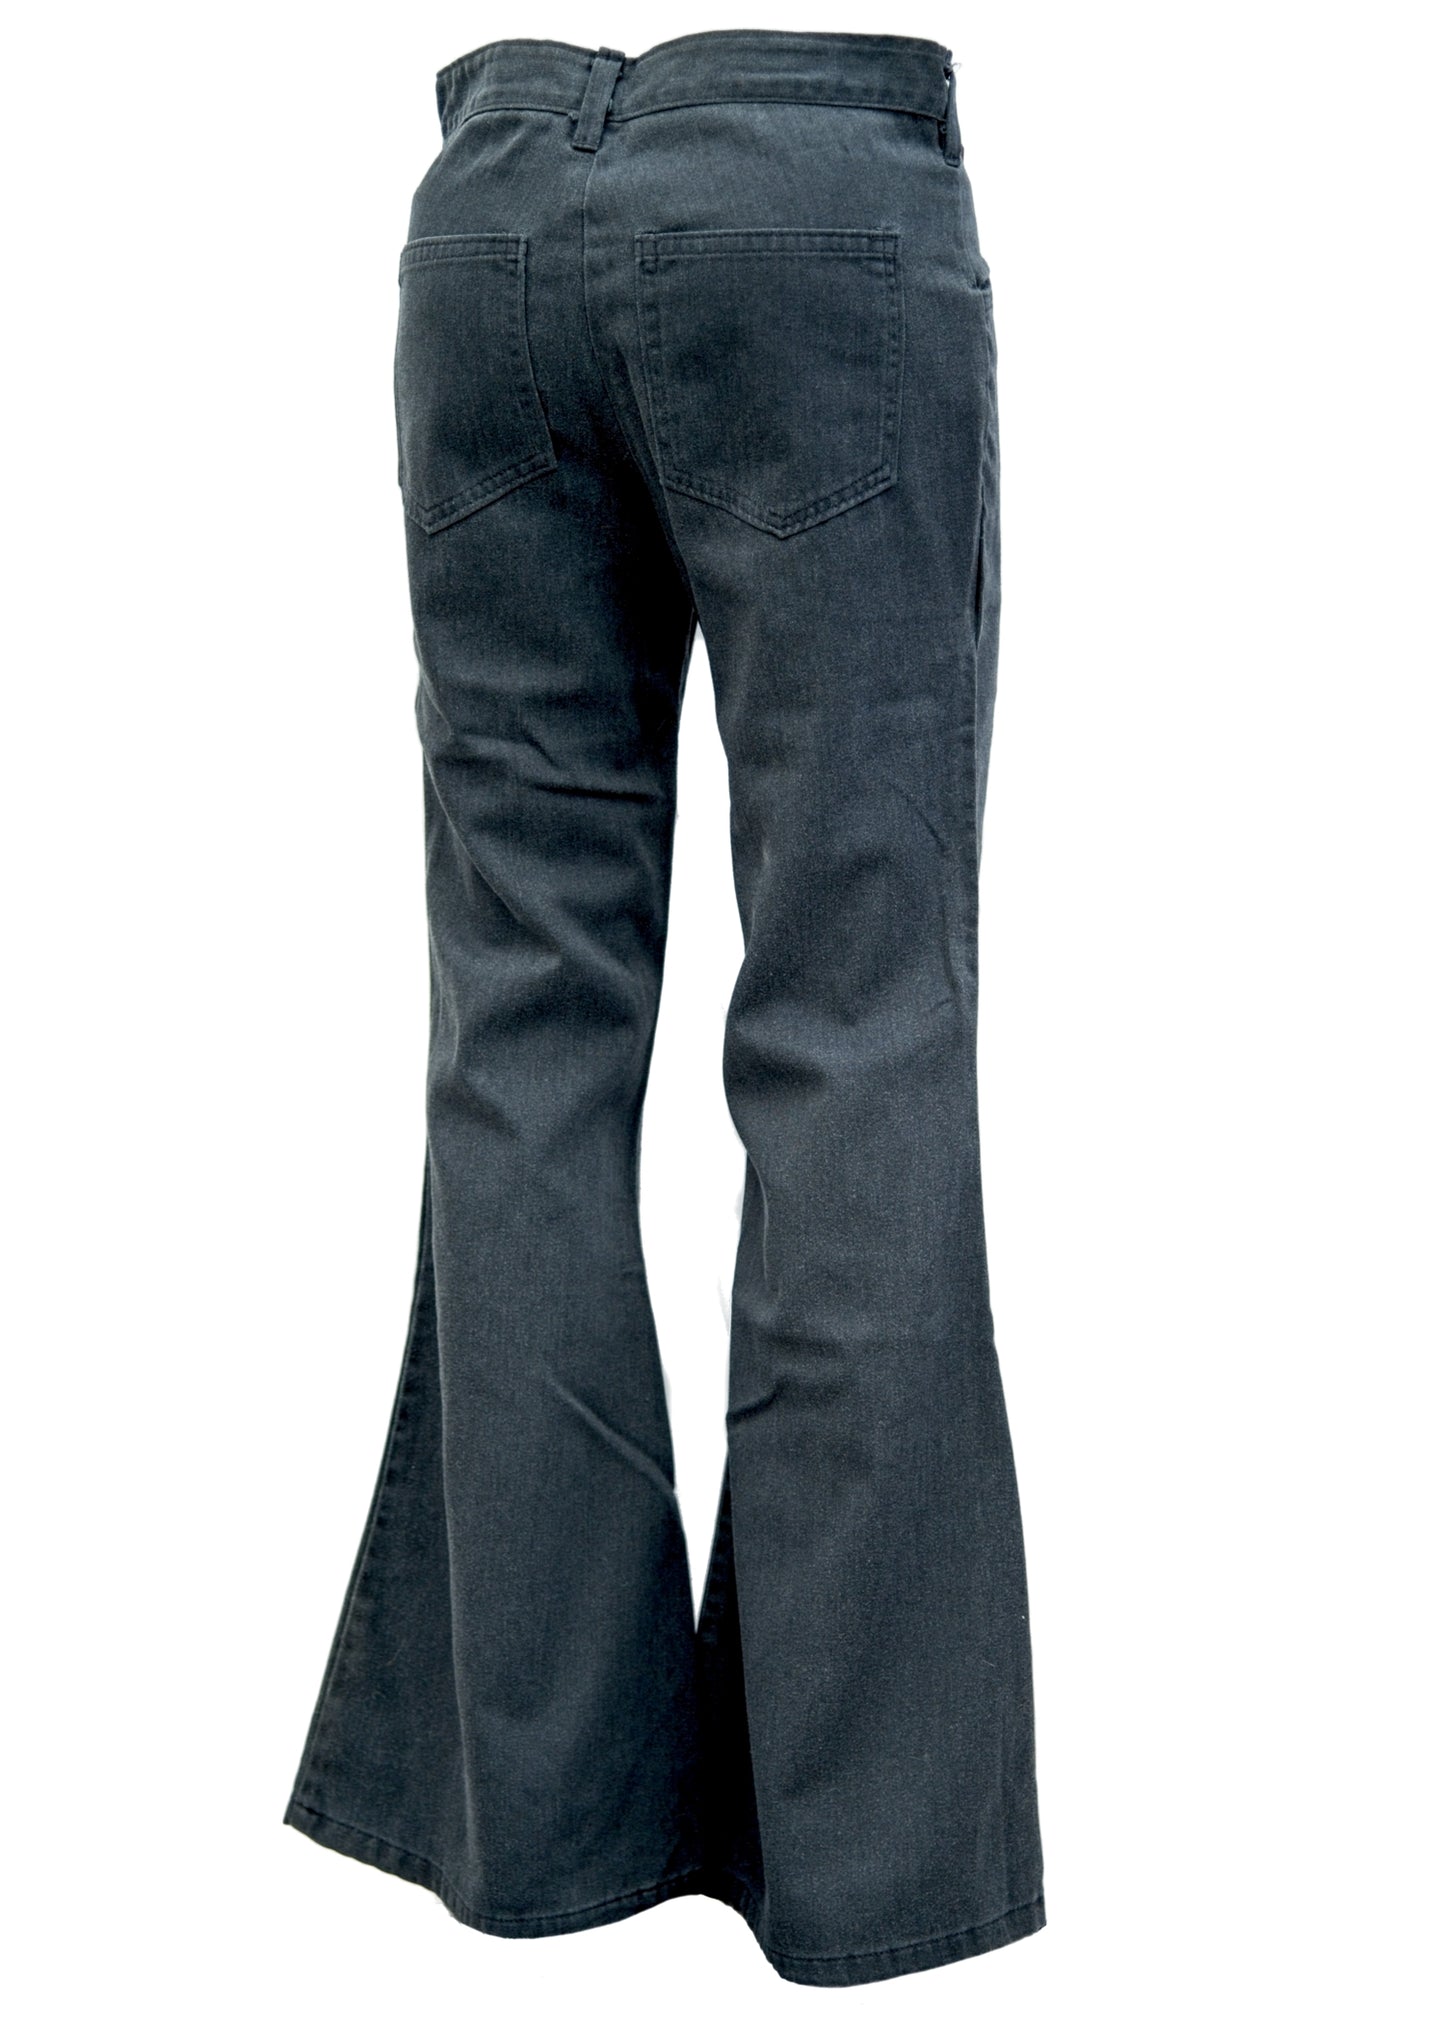 1970s Vintage Charcoal Denim Elephant Bell Bottom Flared Jeans